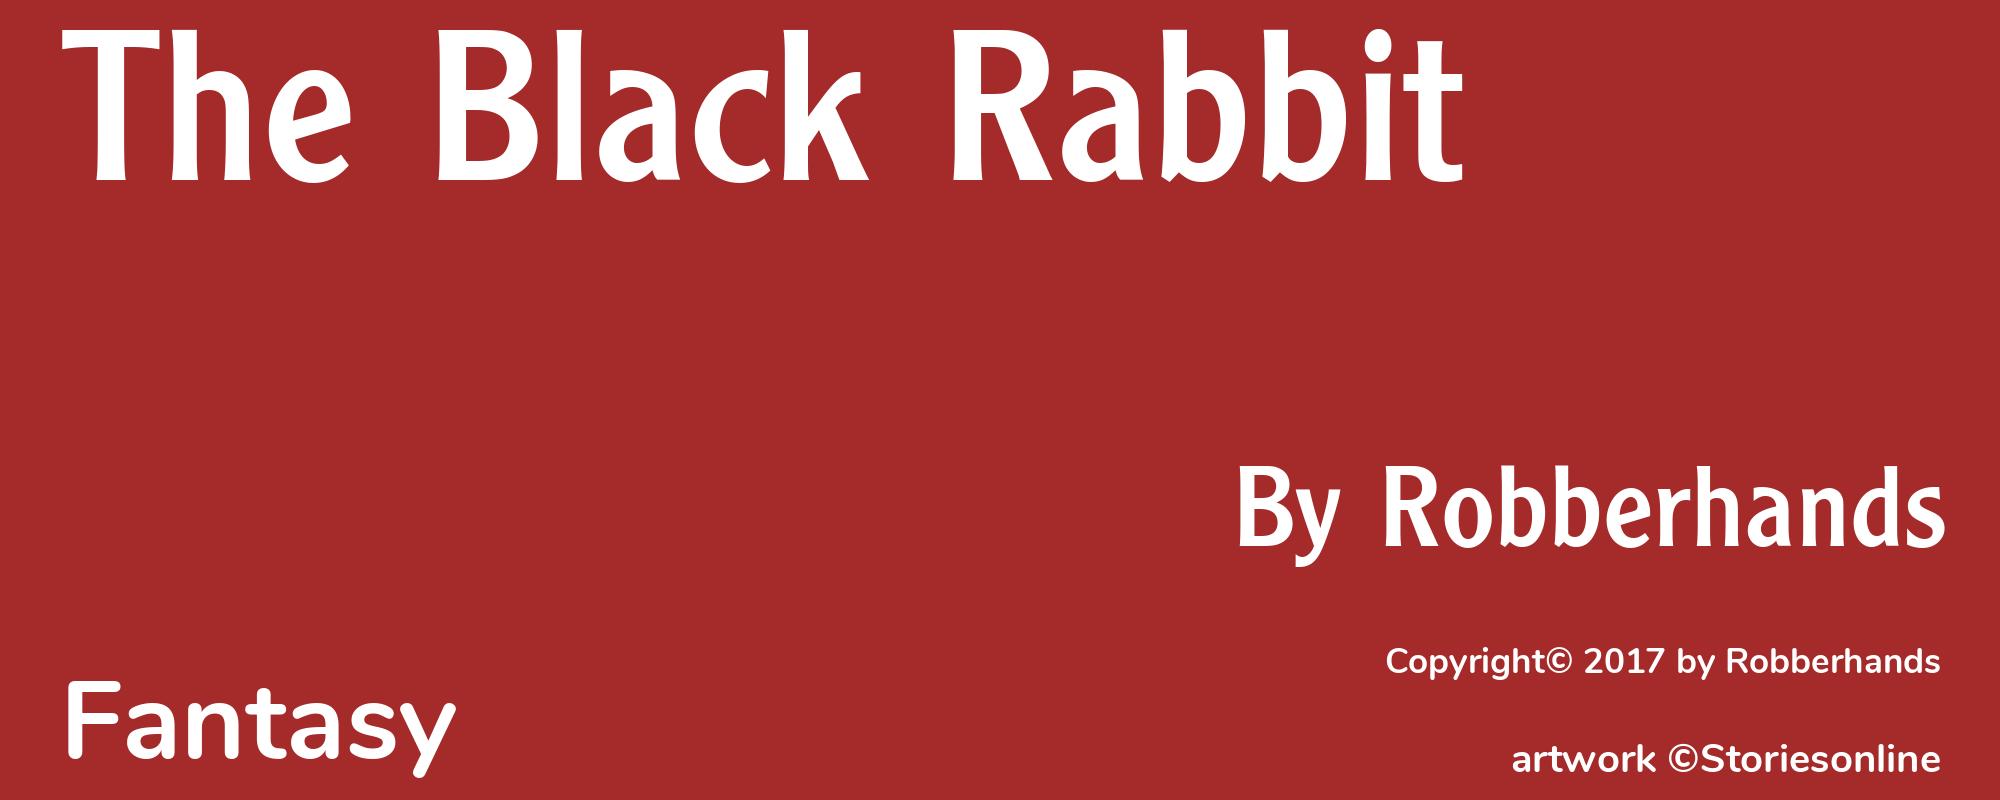 The Black Rabbit - Cover